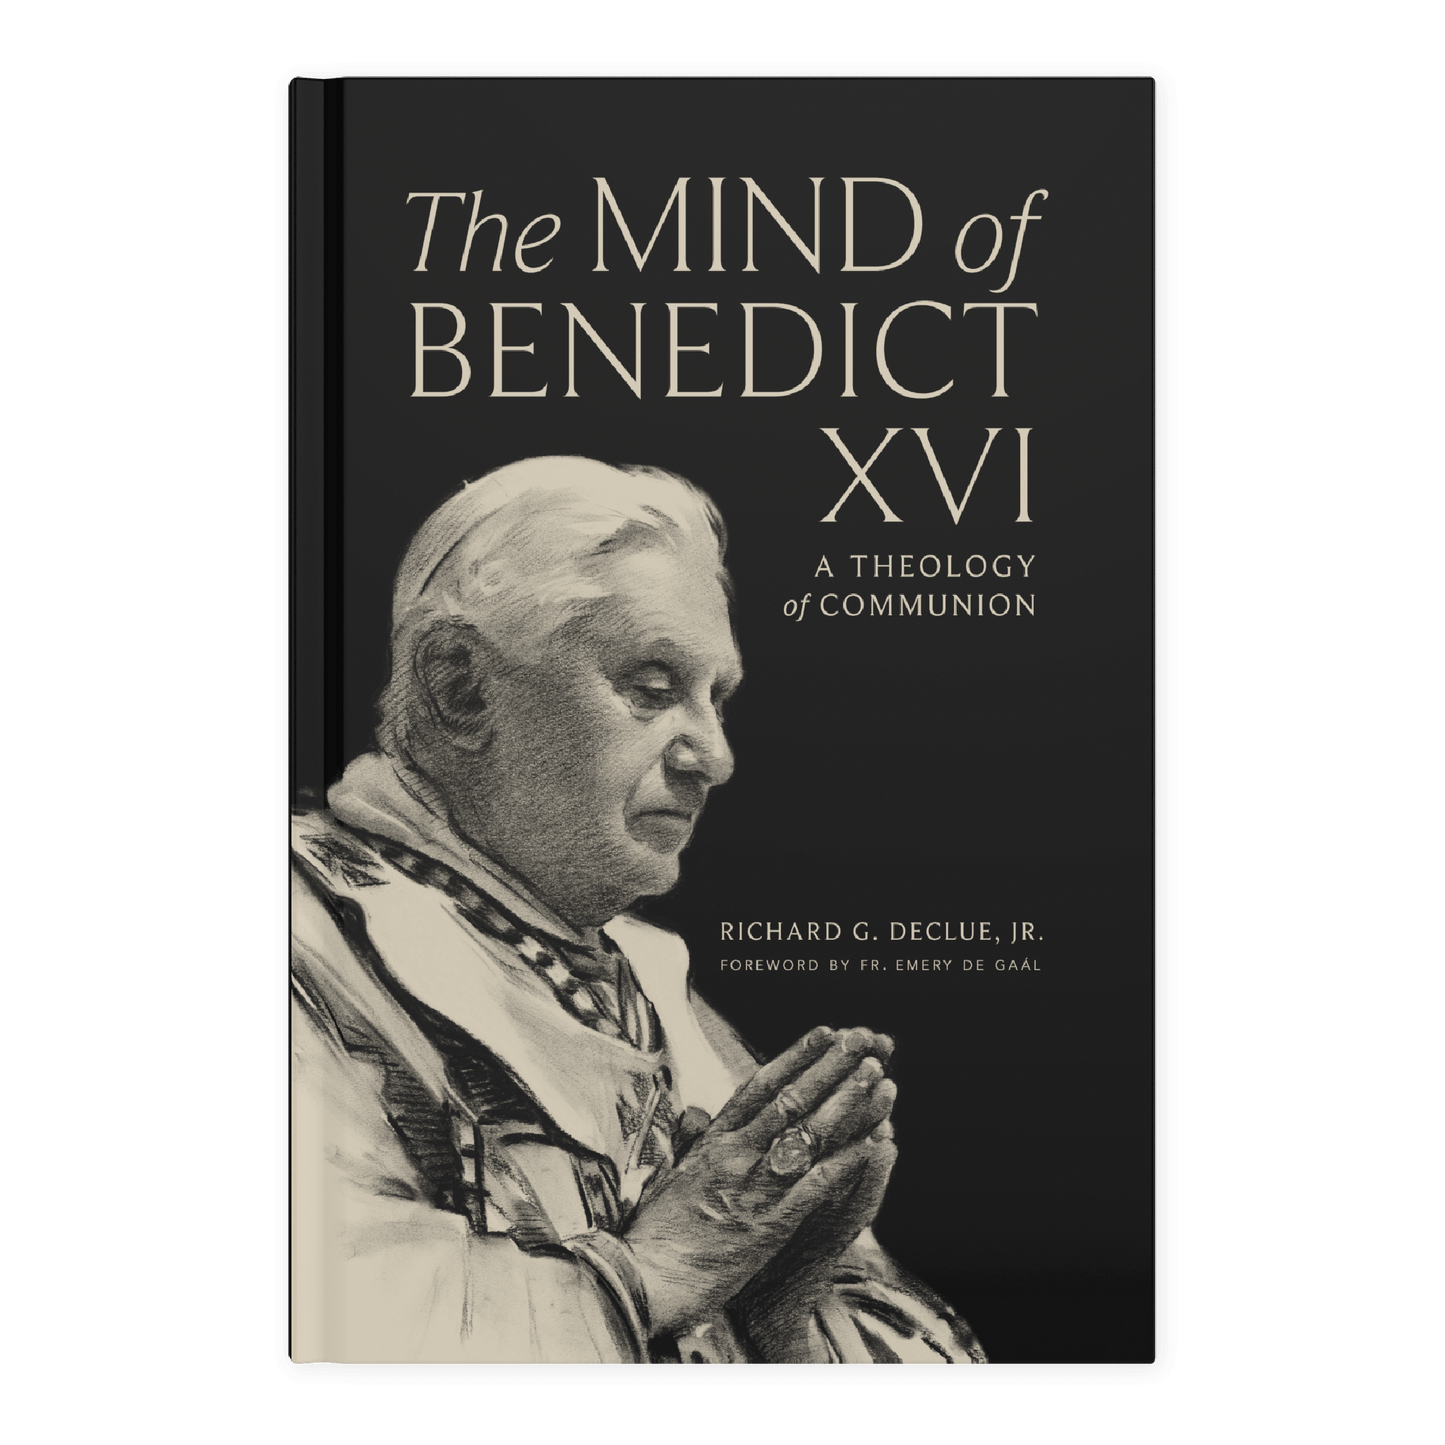 The Mind of Benedict XVI